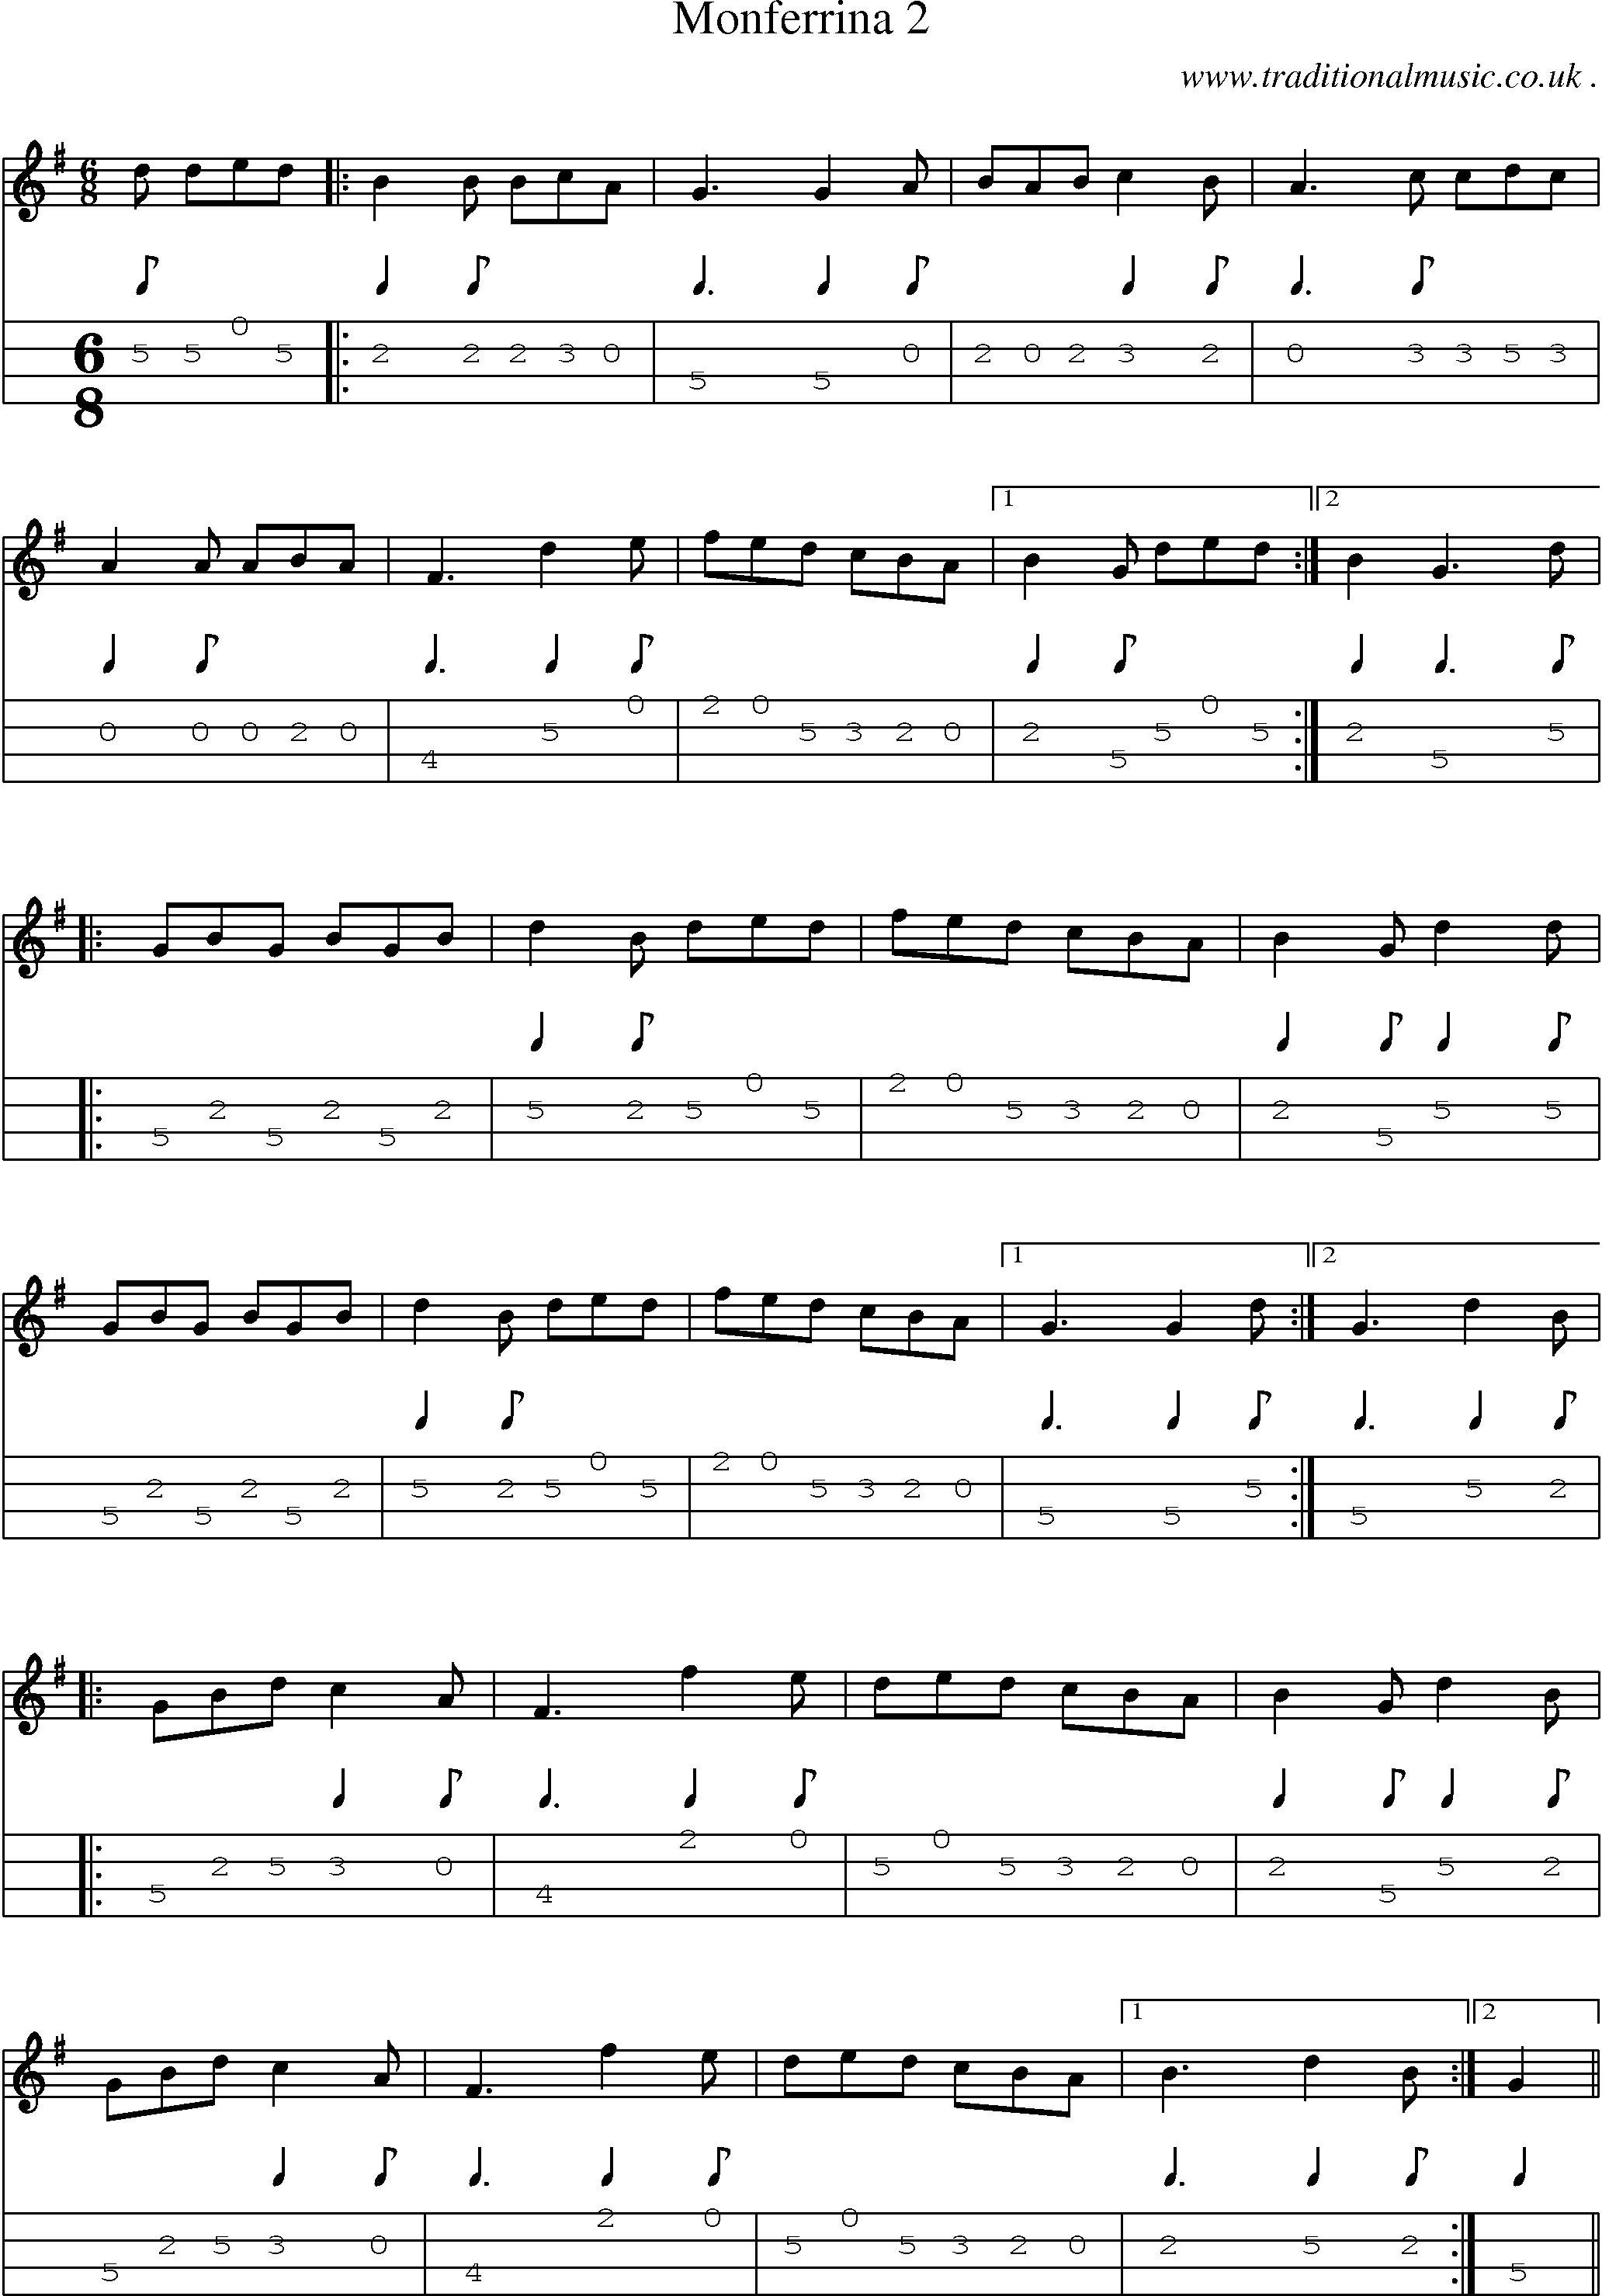 Sheet-Music and Mandolin Tabs for Monferrina 2